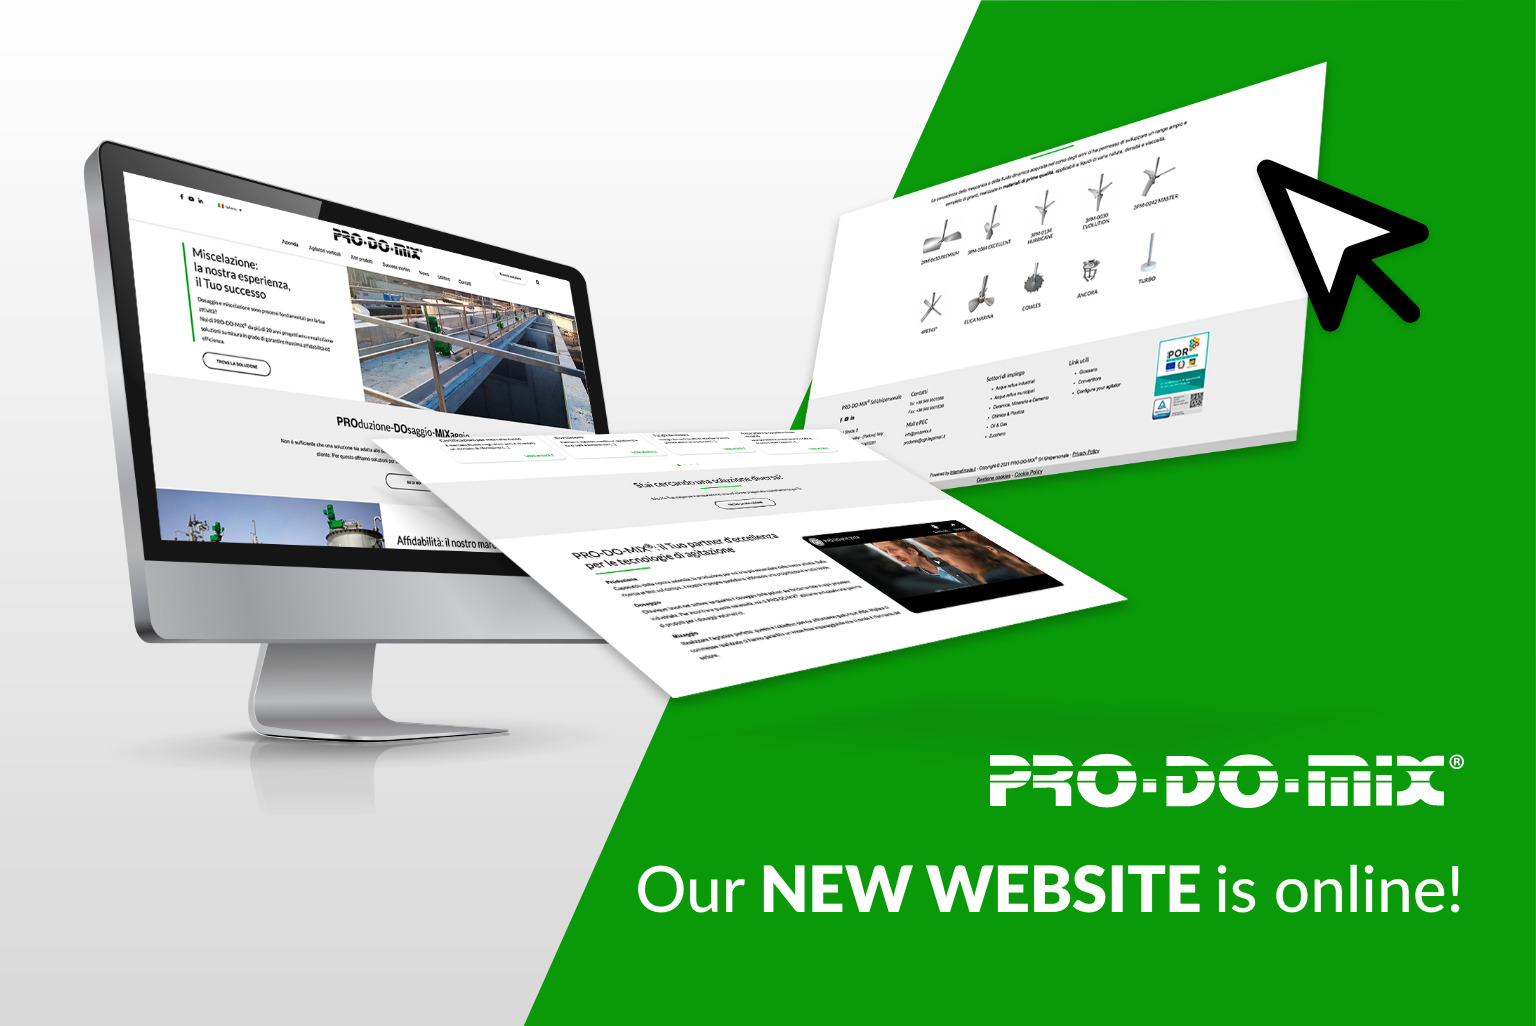 PRO-DO-MIX uploads its new website!